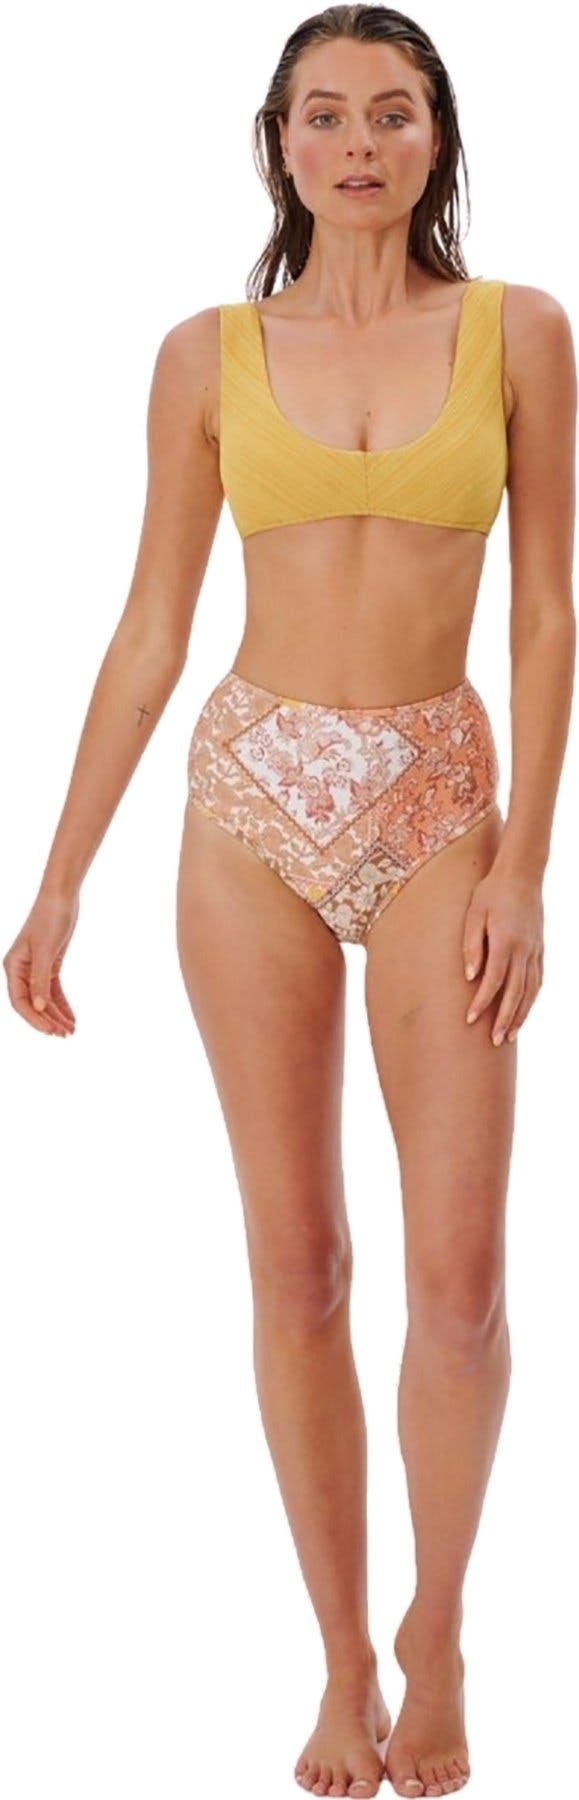 Product image for Wanderer High Waist Good Coverage Bikini Bottom - Women's